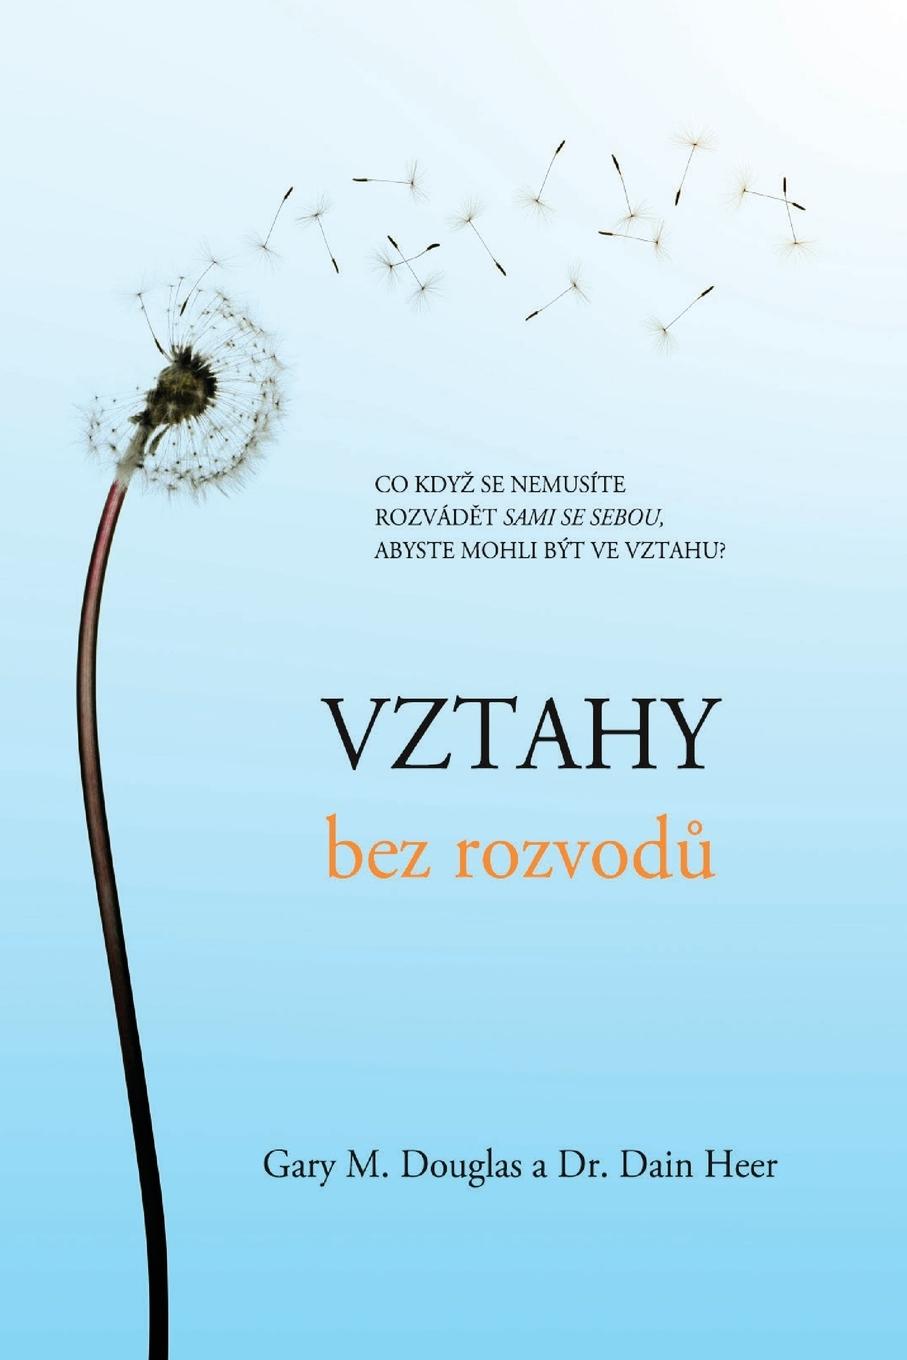 Book Vztahy bez rozvod? (Czech) Dain Heer